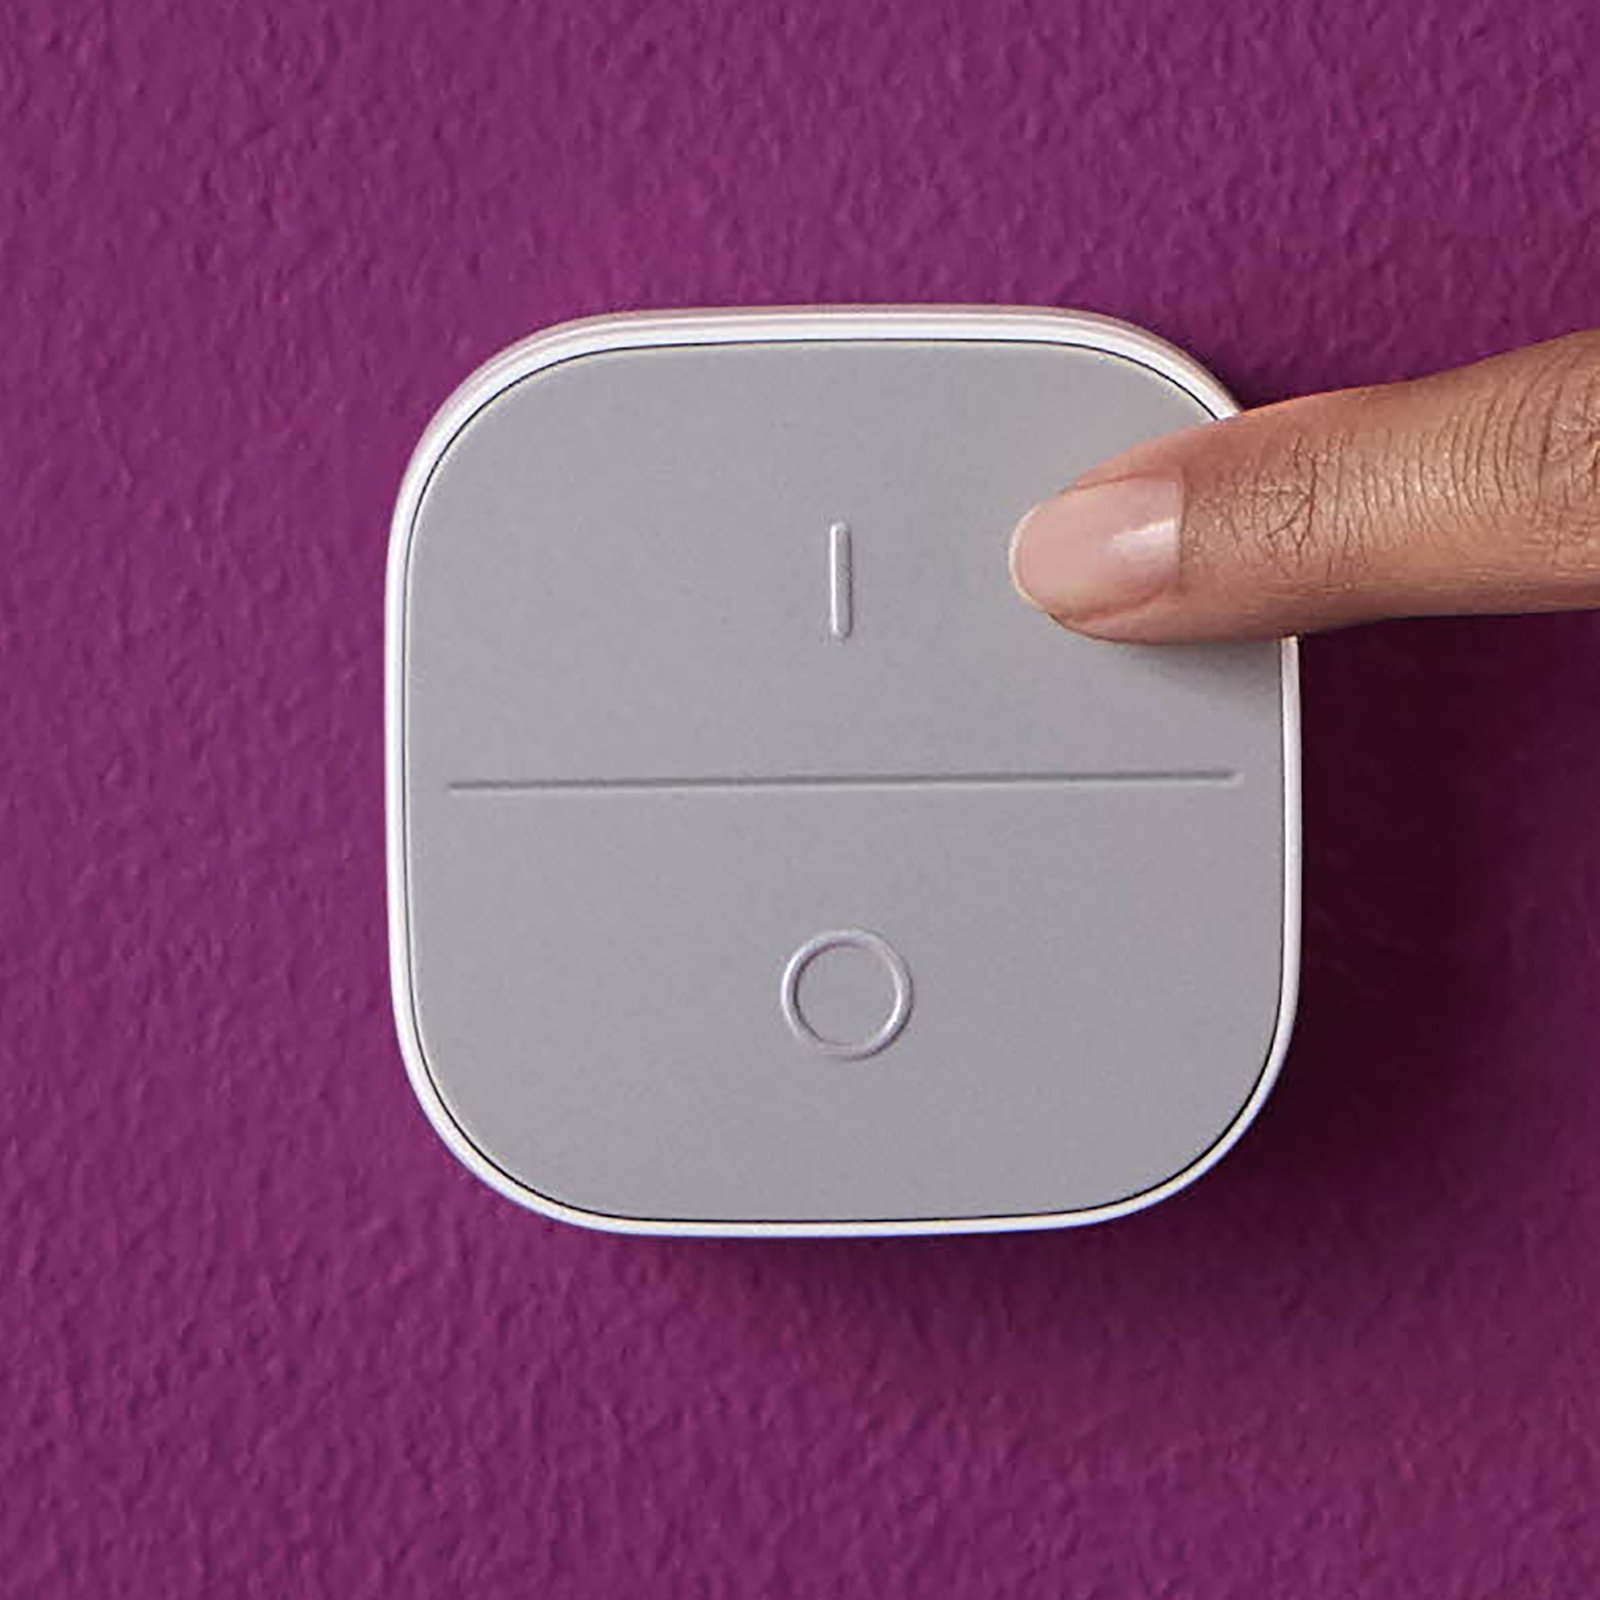 WiZ Portable Button, interruptor de pared móvil